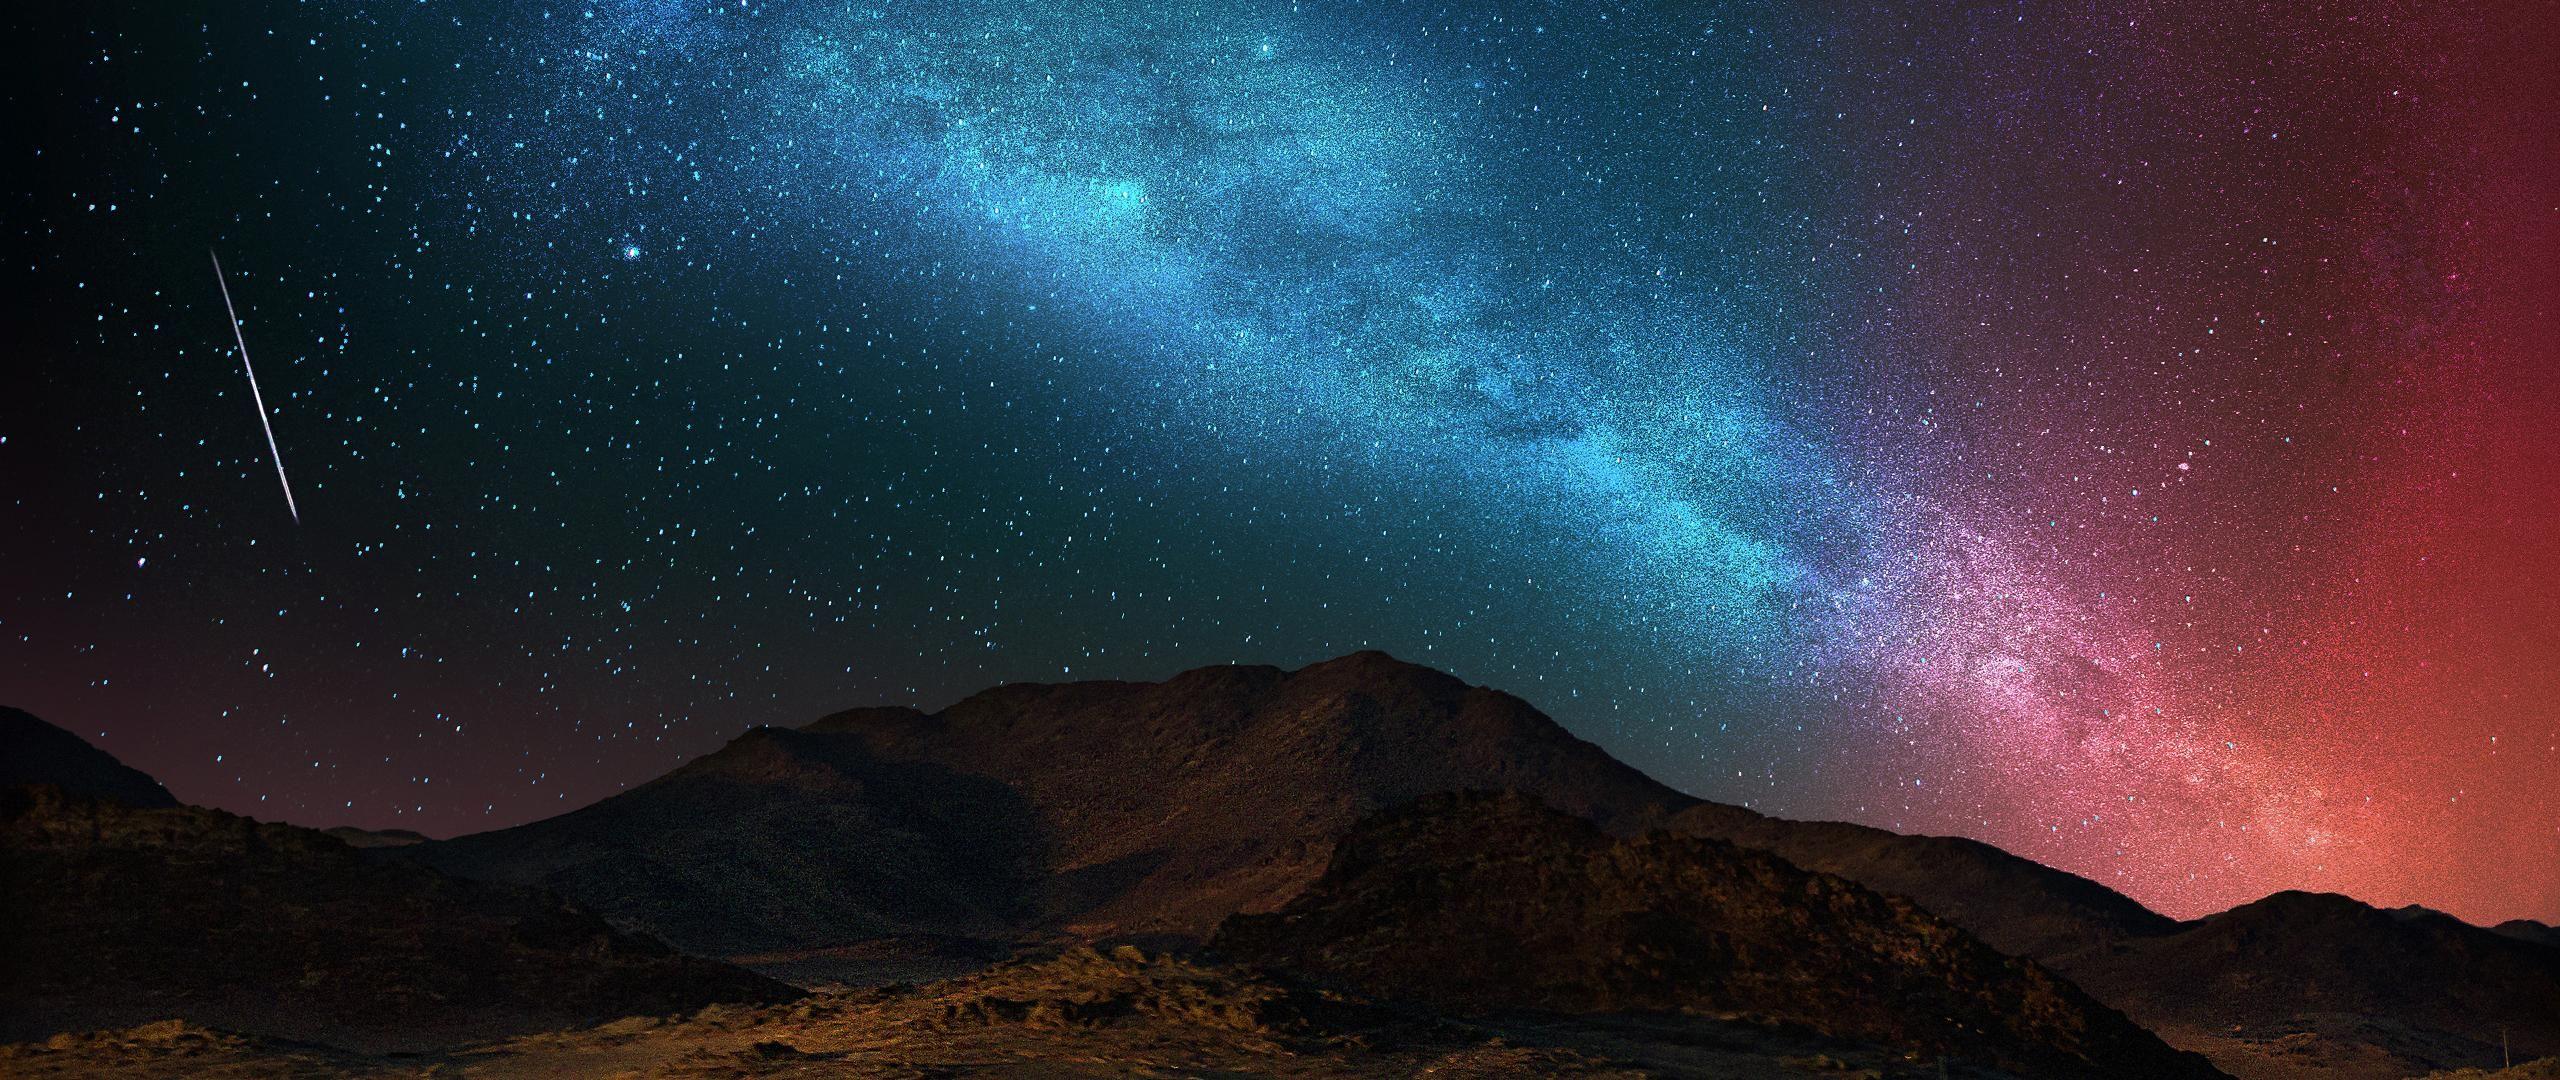 Widescreen Ubuntu Wallpaper. nature. Starry night wallpaper, Sky